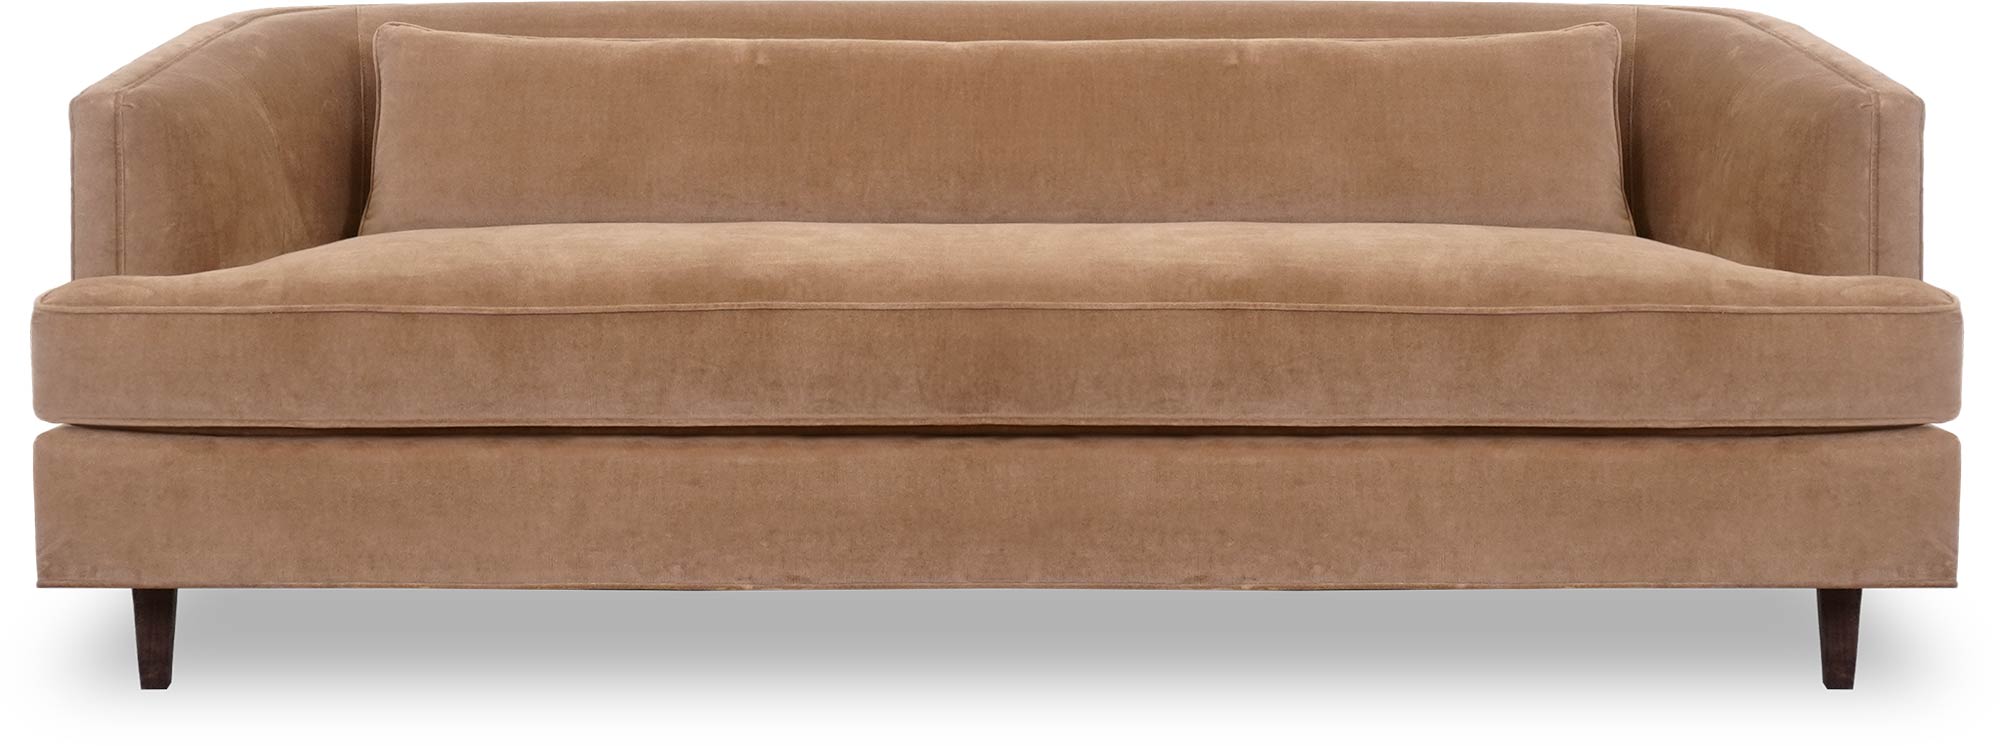 88 Fritz sofa in Cannes Golden Taupe velvet with optional bolster pillow